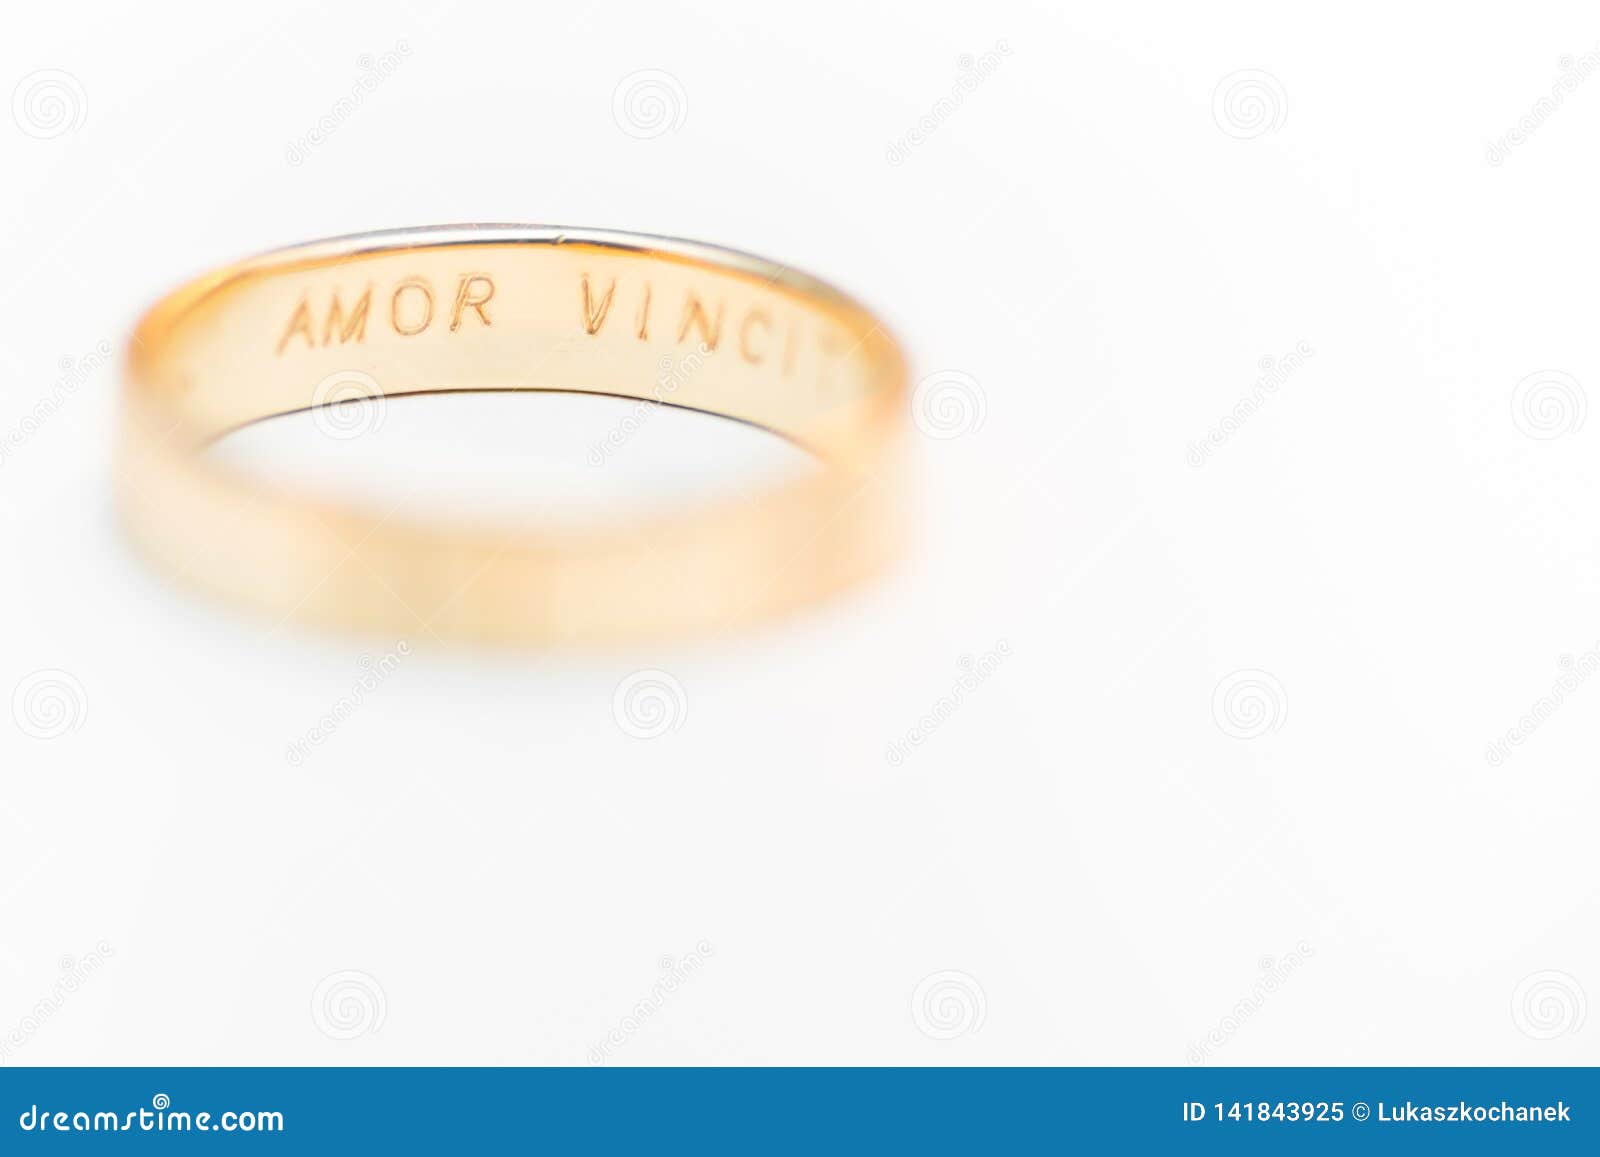 golden wedding ring  on white background